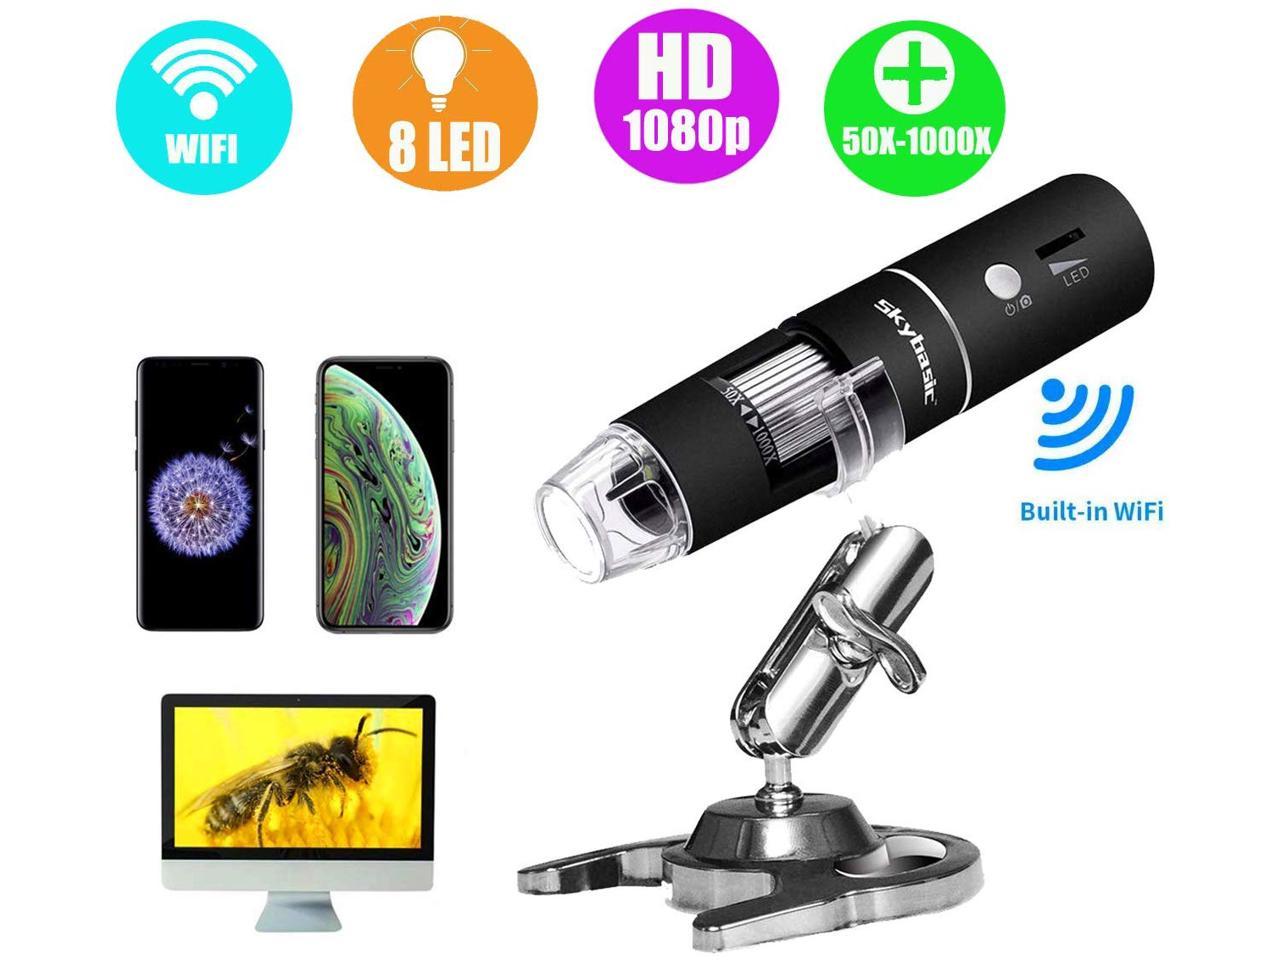 LDJC Digital Microscope WiFi Wireless Digital Microscope Handheld USB Microscope Camera Mobile Phone Universal 1000X HD 720P Electron Microscope Digital Magnifying Glass